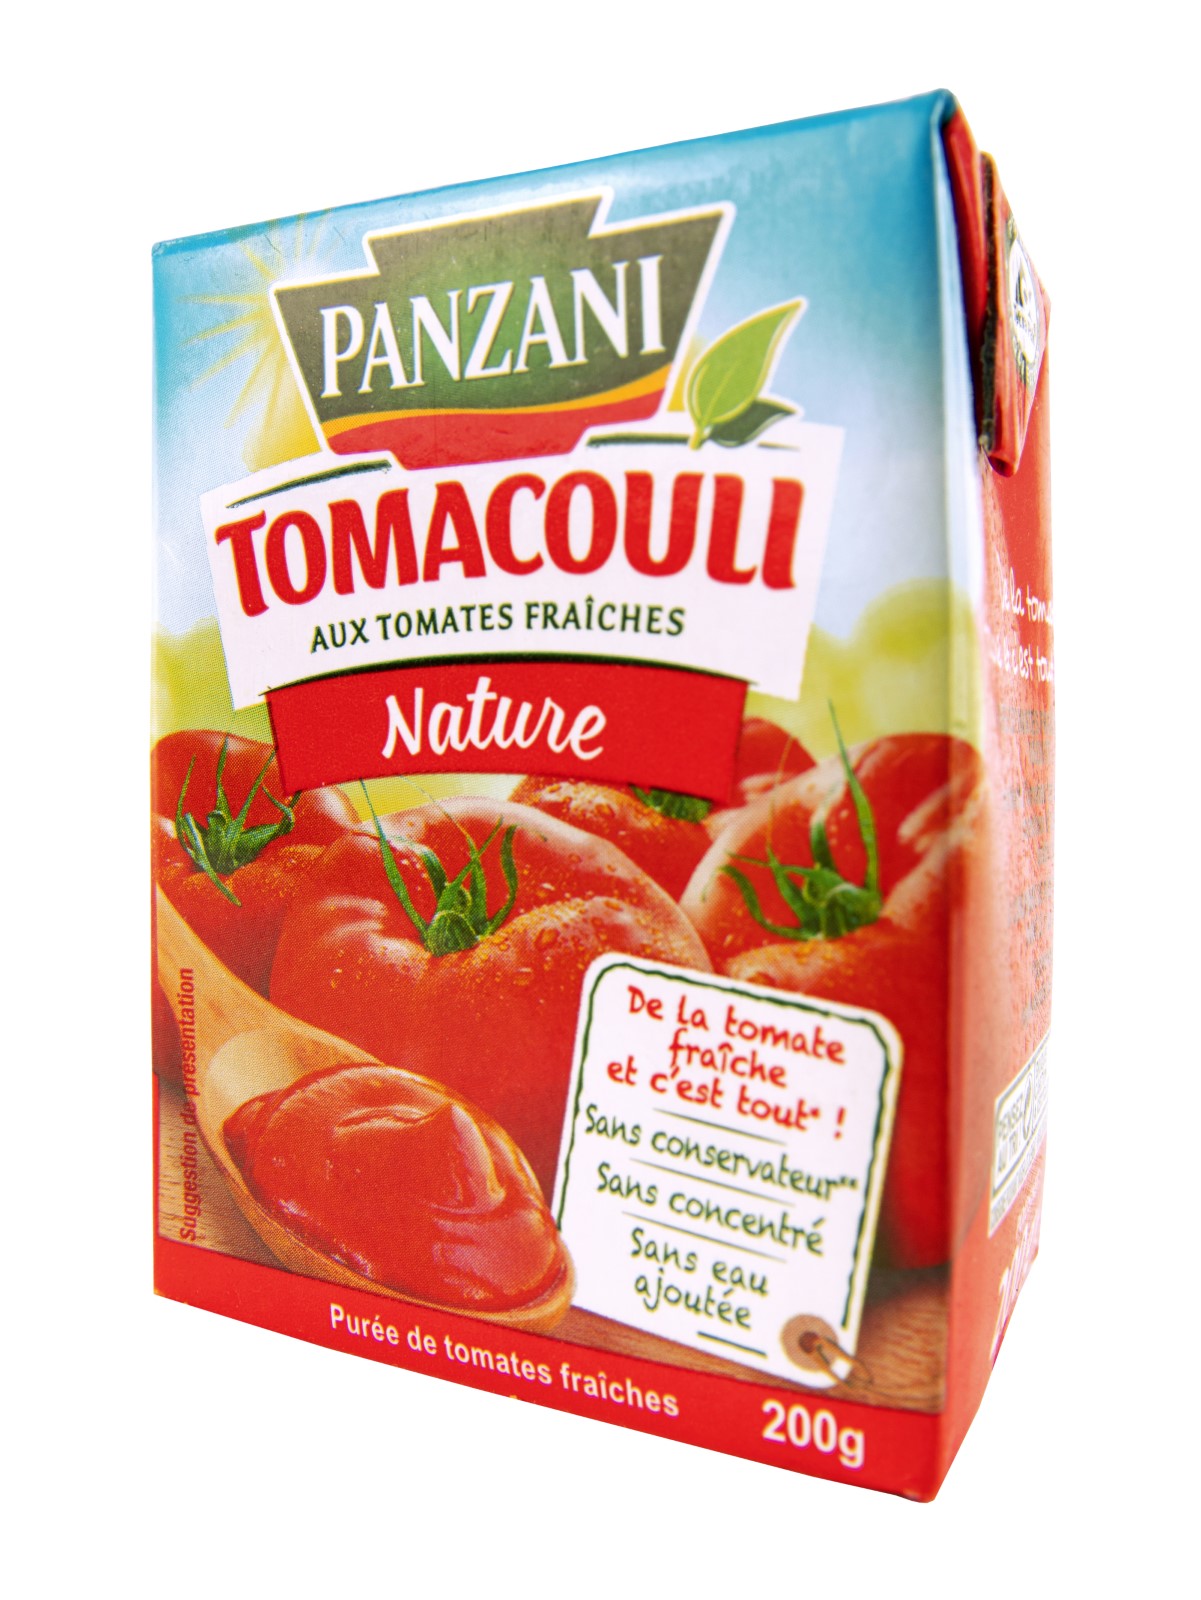 Соус Panzani томатное пюре Tomacouli, 200г, Франция